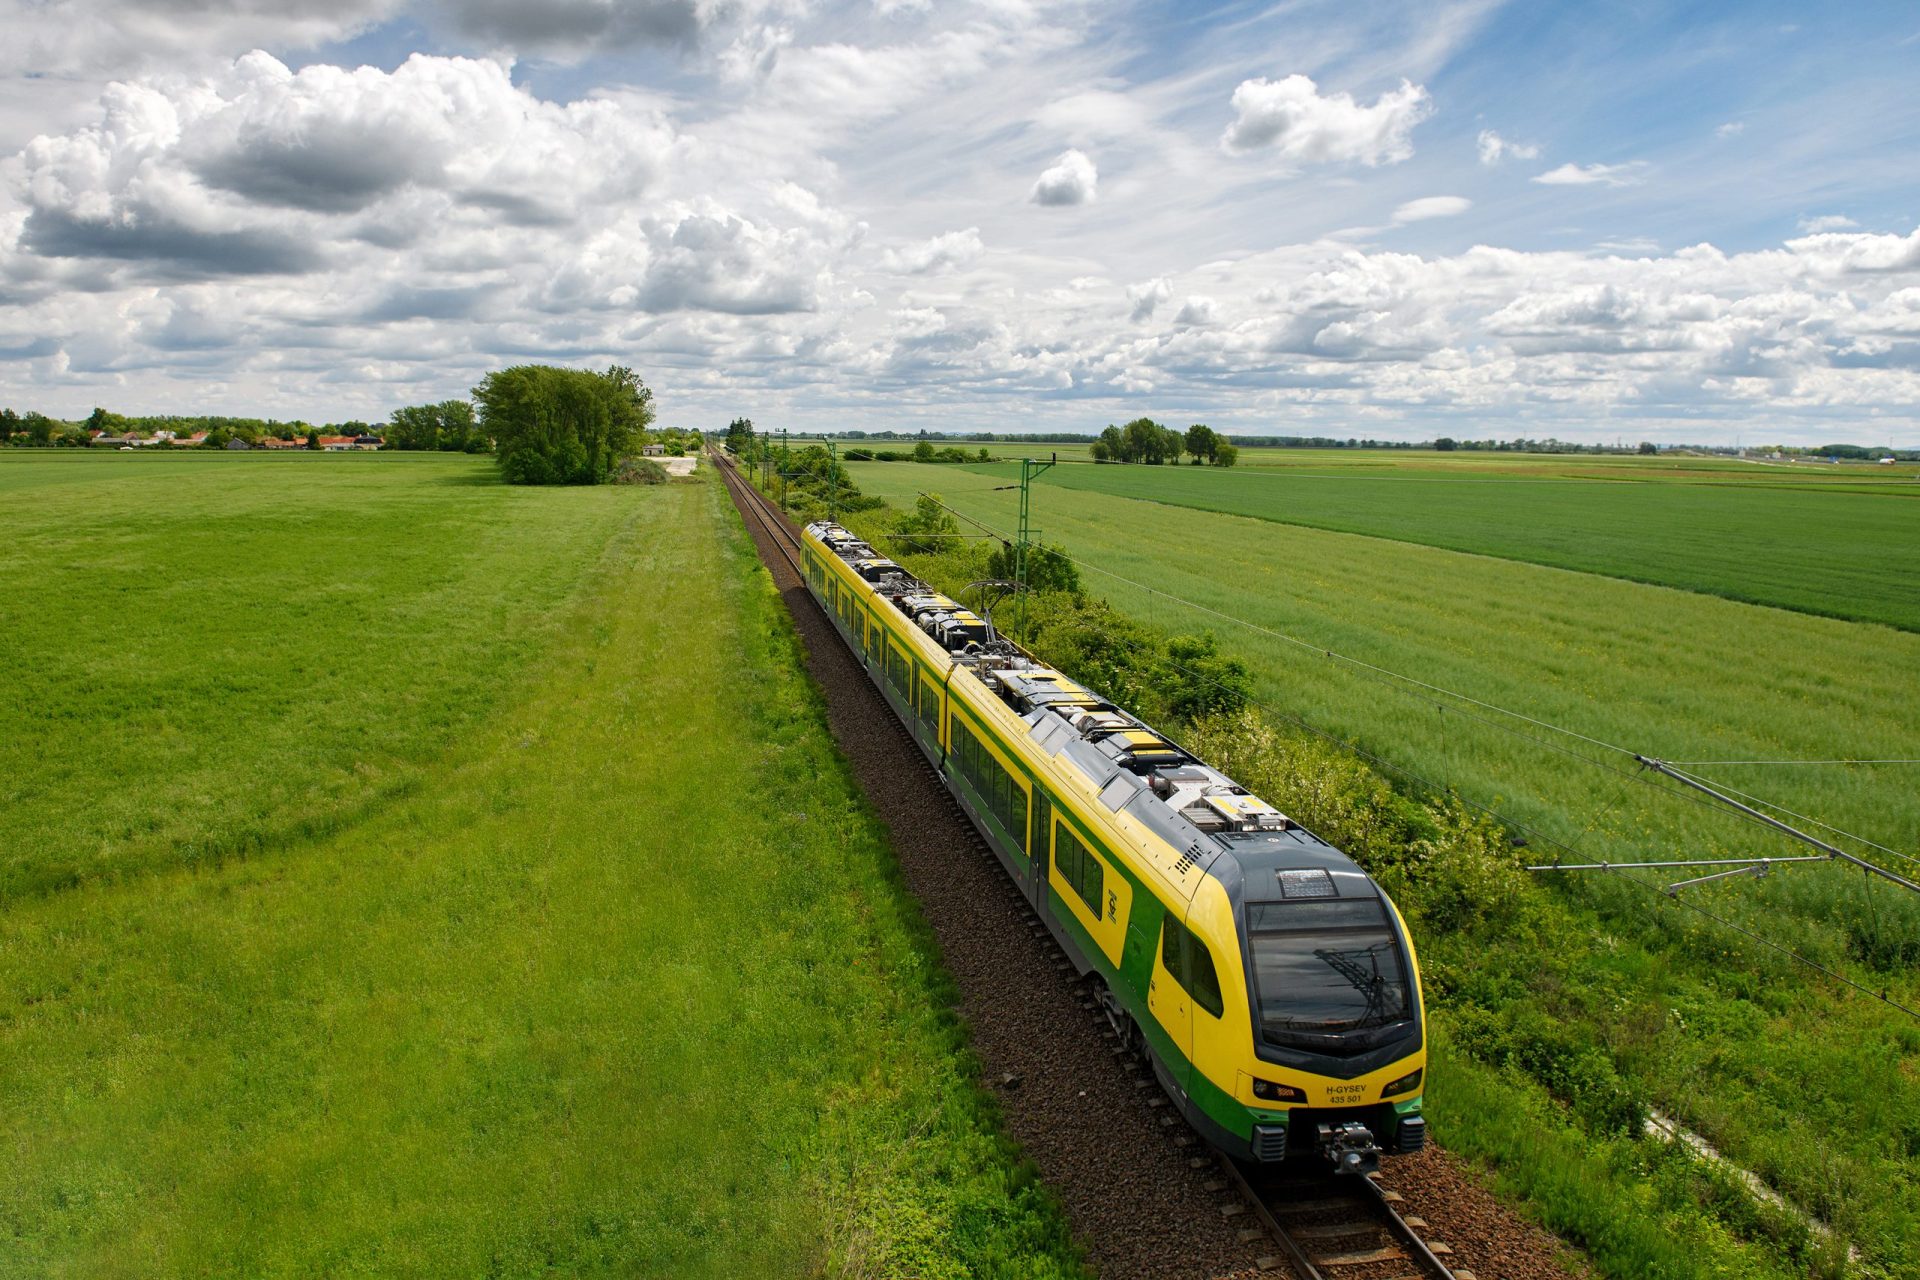 Investment in modern railway transport